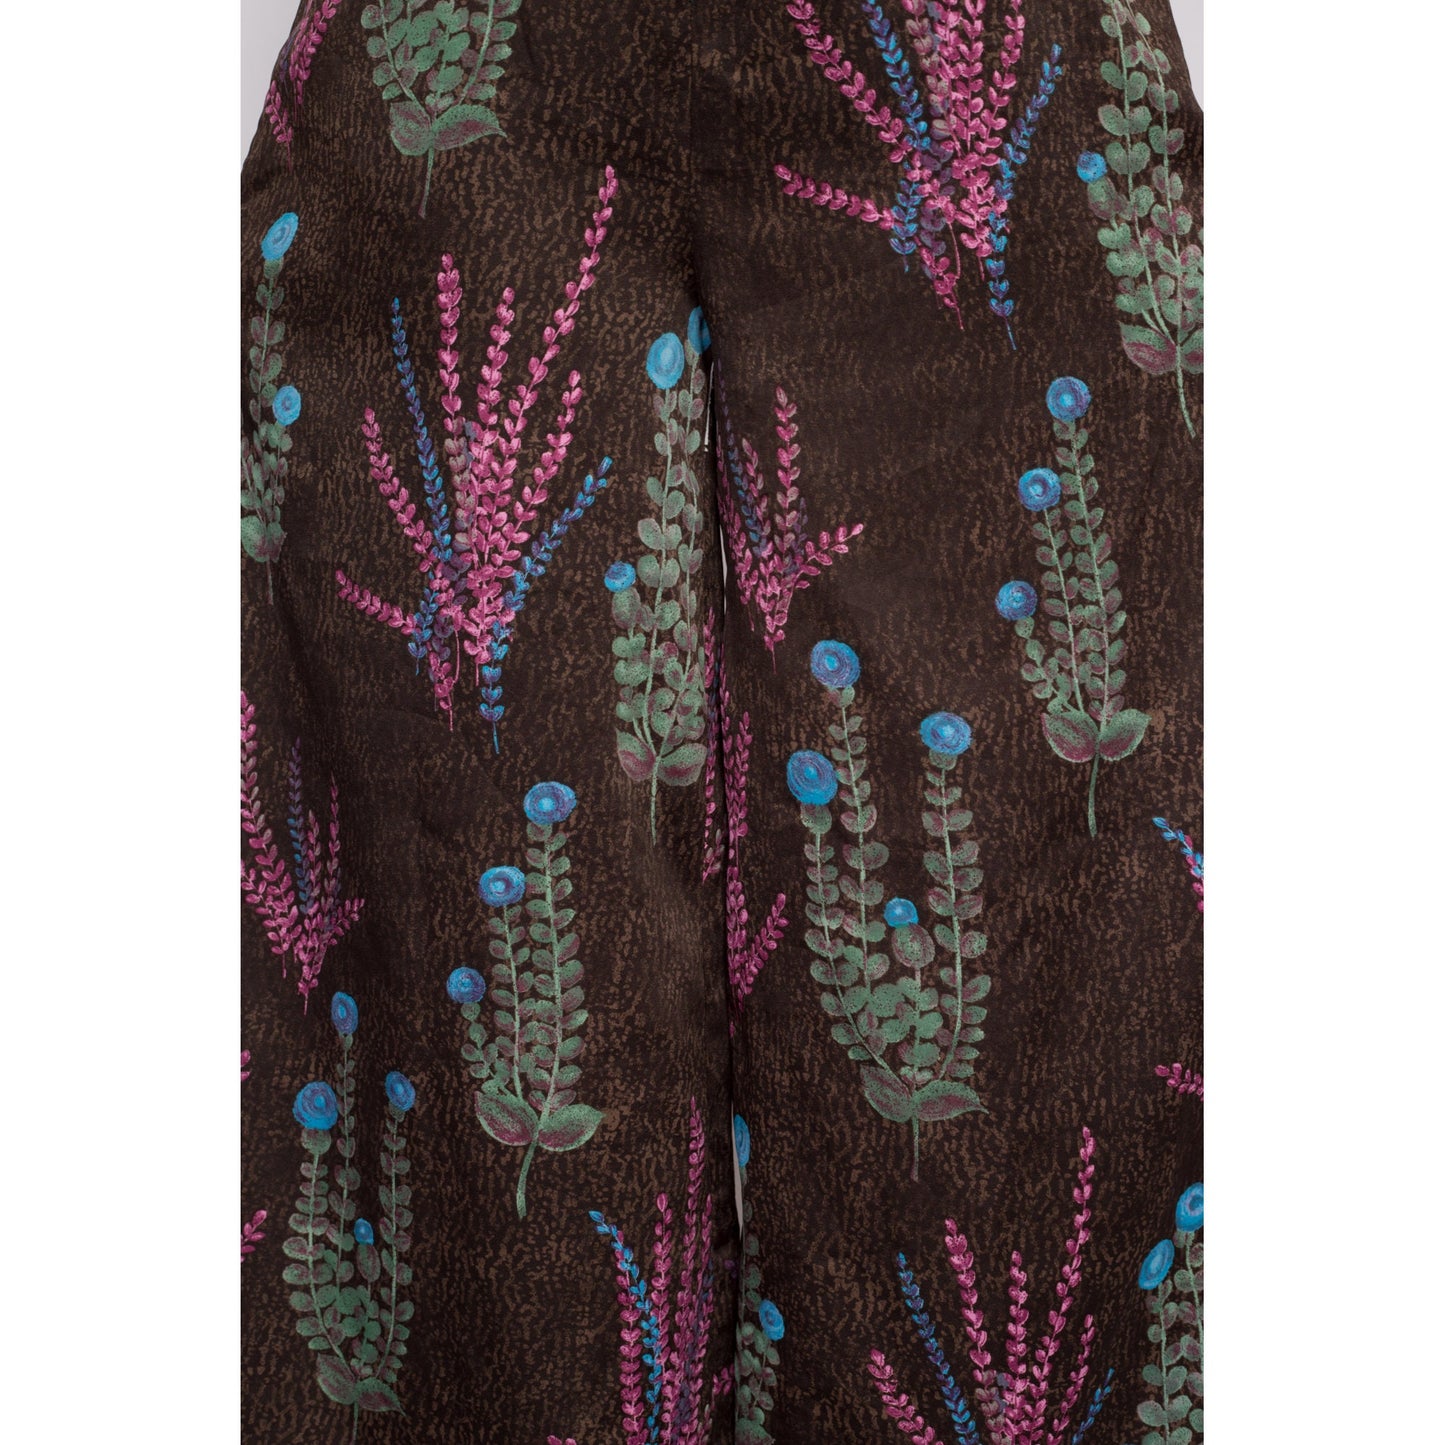 Large 70s Floral Halter Palazzo Jumpsuit | Boho Vintage Earth Tone Cowl Neck Sleeveless Disco Pantsuit